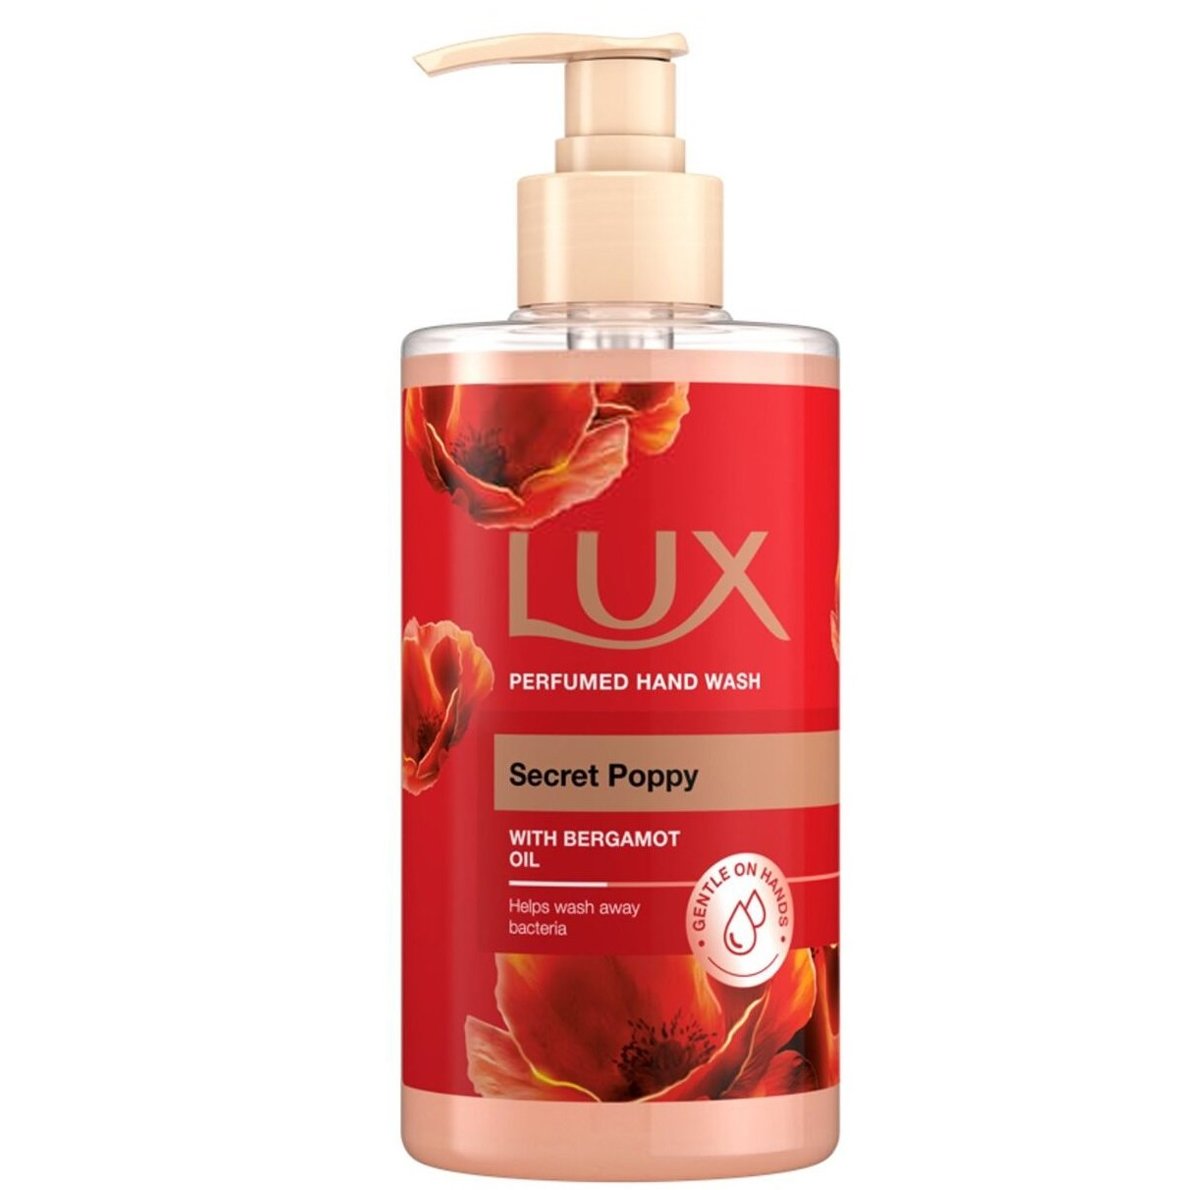 Lux Secret Poppy Perfumed Hand Wash with Bergamot Oil Κρεμοσάπουνο με Έλαιο Περγαμόντου & Άρωμα από Άνθη Εξωτικών Λουλουδιών 380ml